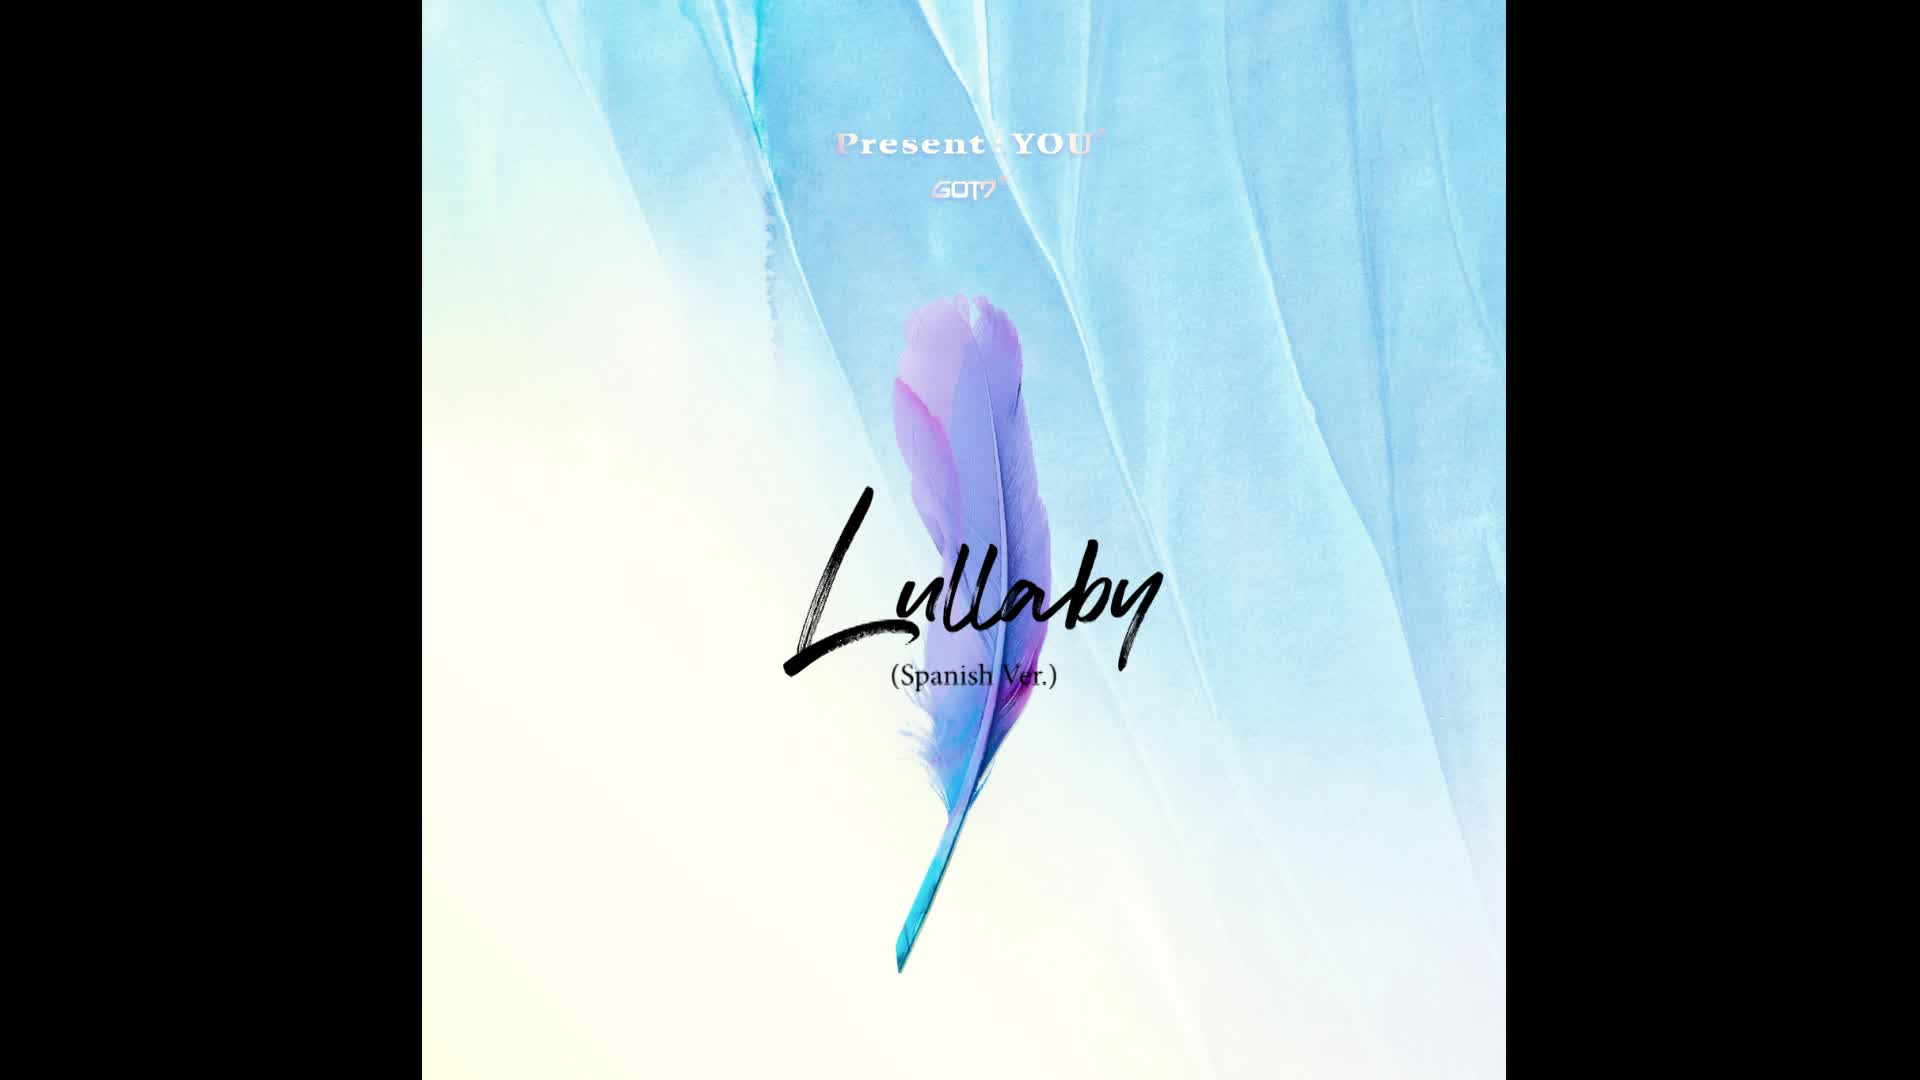 GOT7(갓세븐) "Lullaby" (Spanish Ver.) Track Spoiler